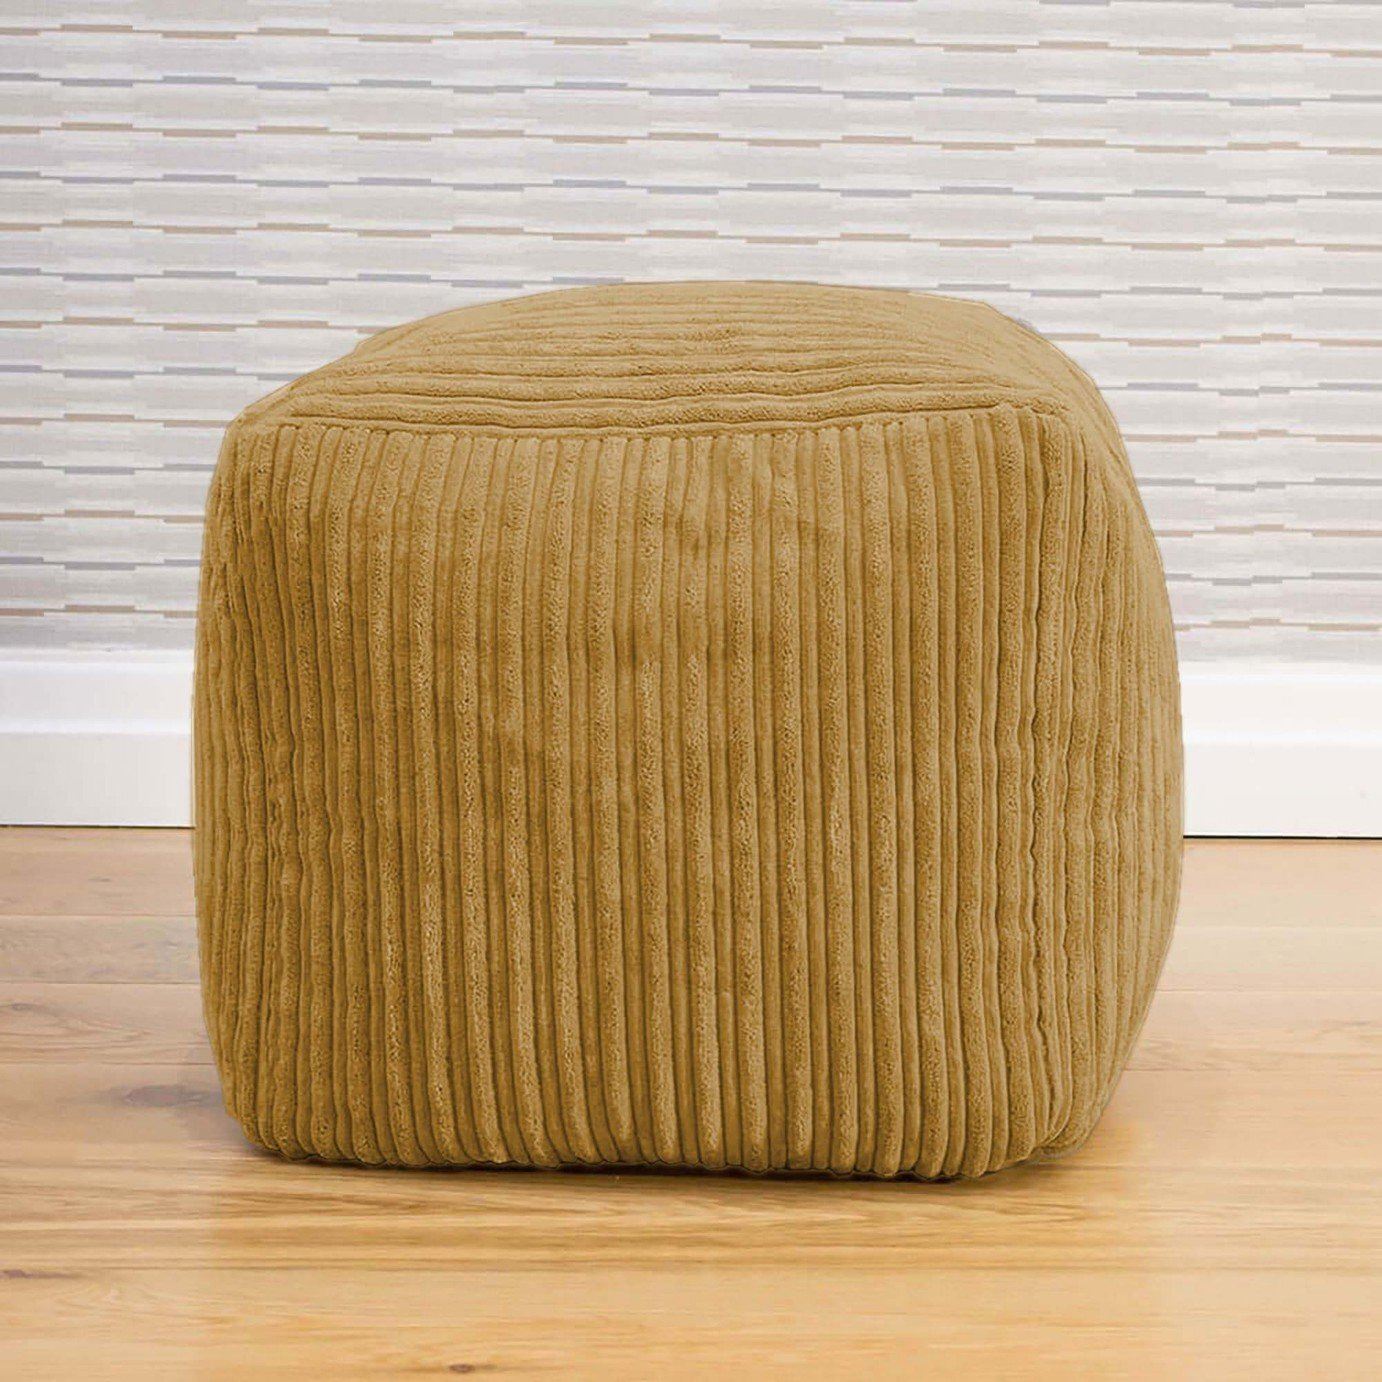 rucomfy Jumbo Cord Cube Bean Bag - Mustard - image 1